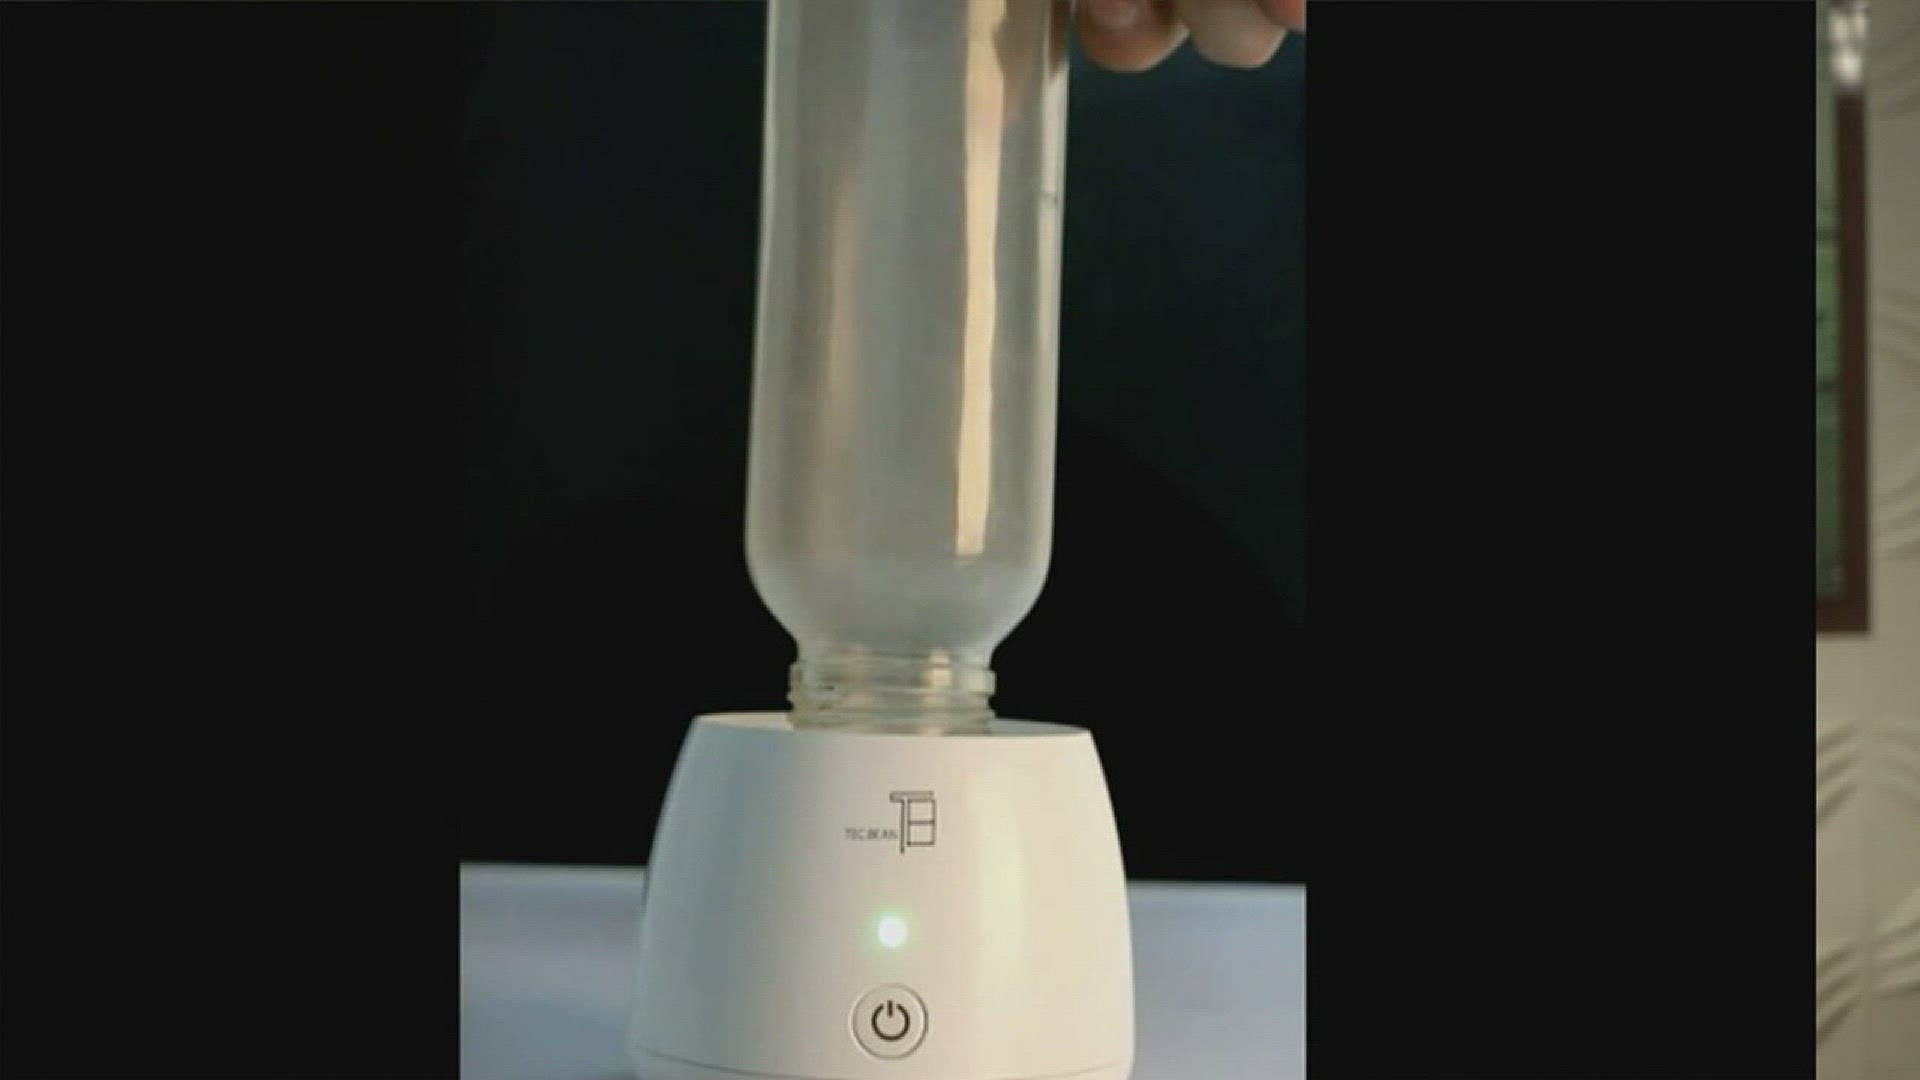 Matt Granite features an air purifier with strong capabilities.